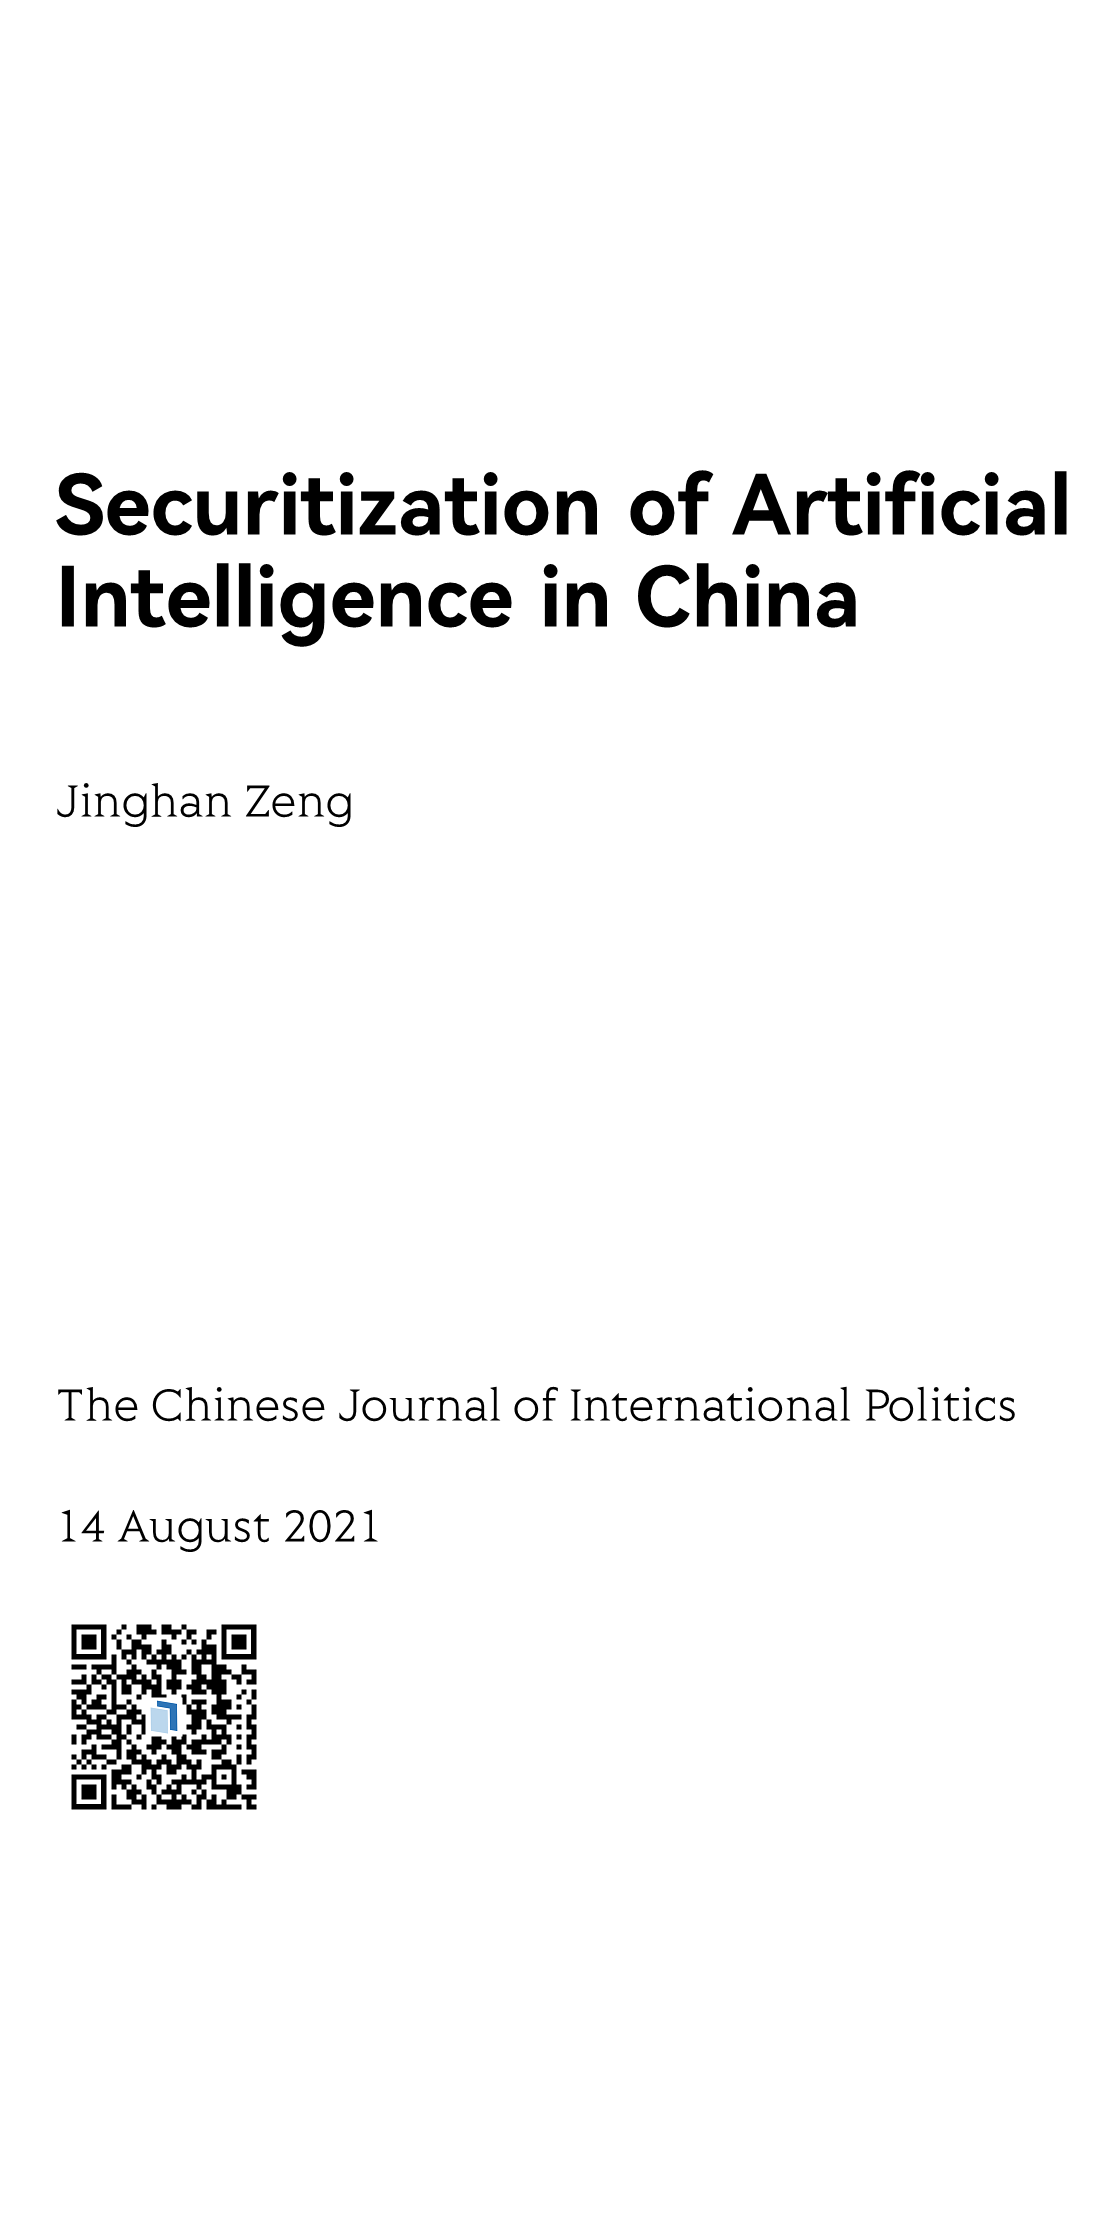 The Chinese Journal of International Politics_1